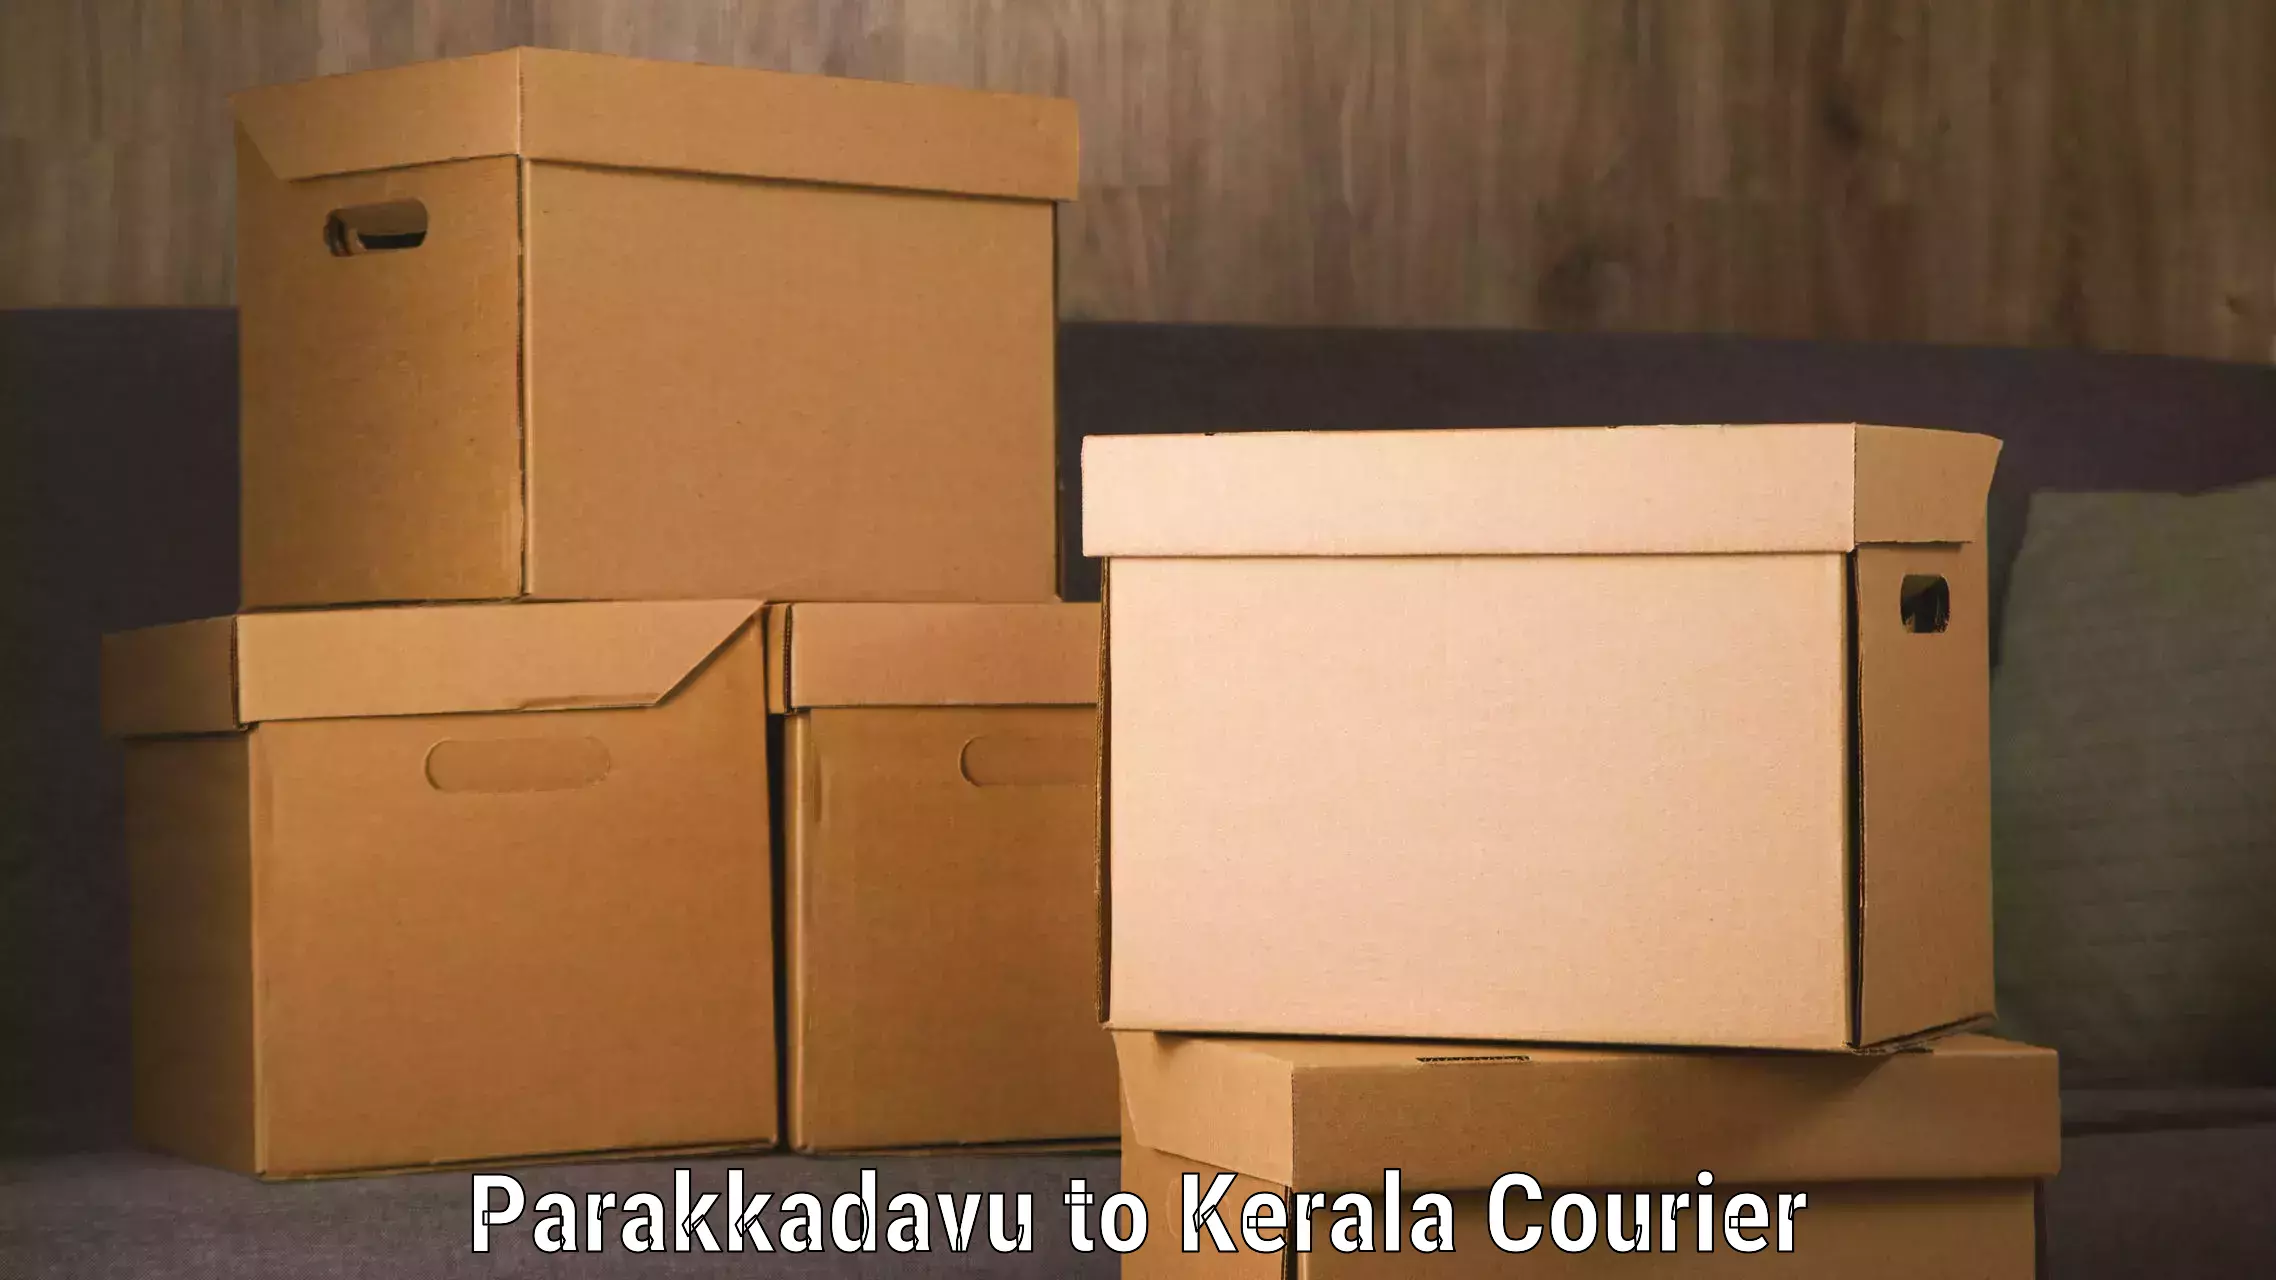 Speedy delivery service Parakkadavu to Kerala